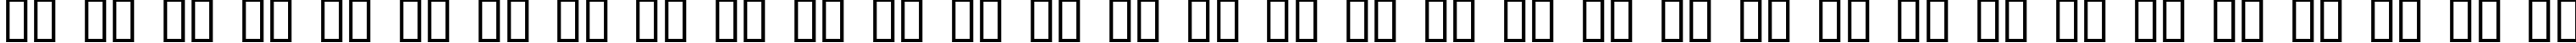 Пример написания русского алфавита шрифтом BN Manson Nights